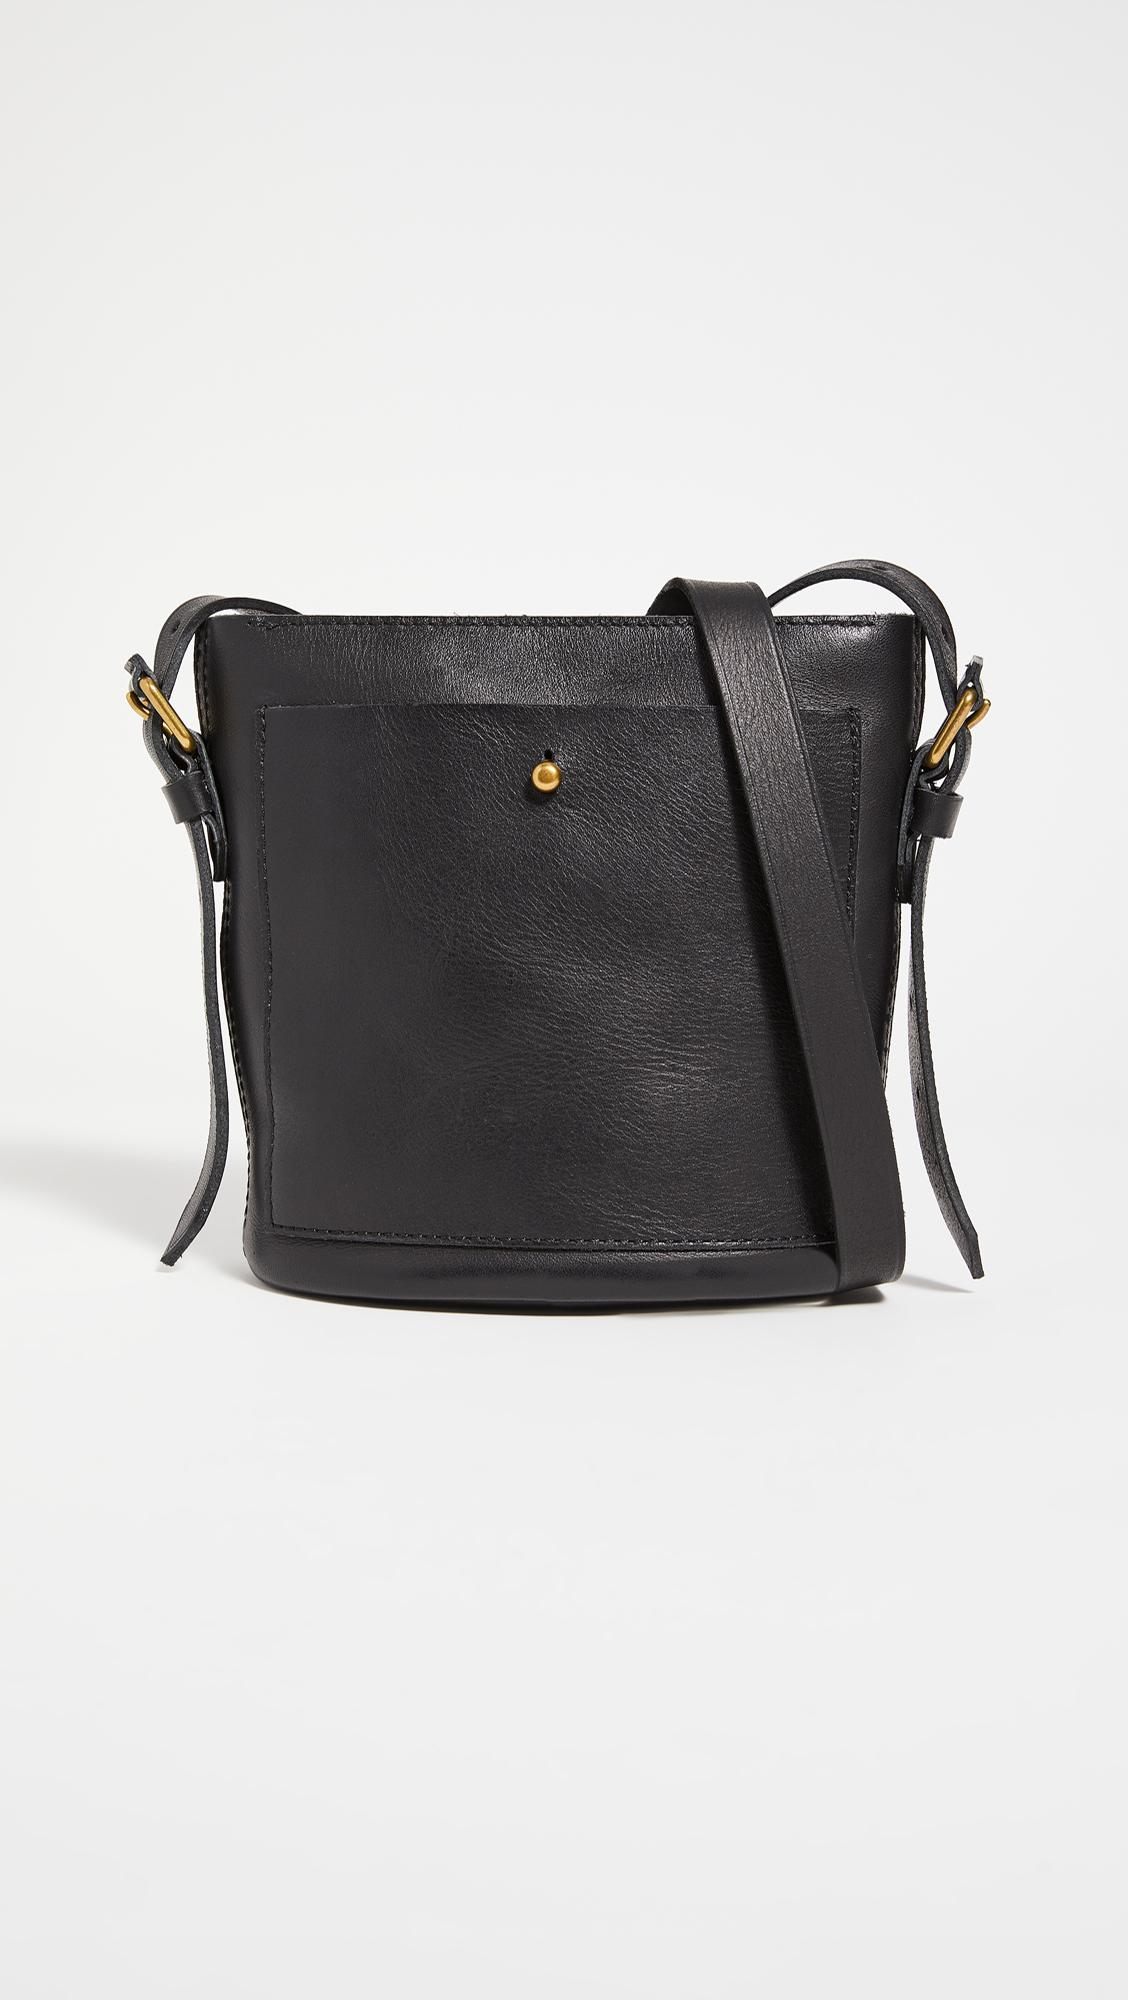 Madewell Leather Mini Transport Bucket Crossbody Bag in Black - Lyst